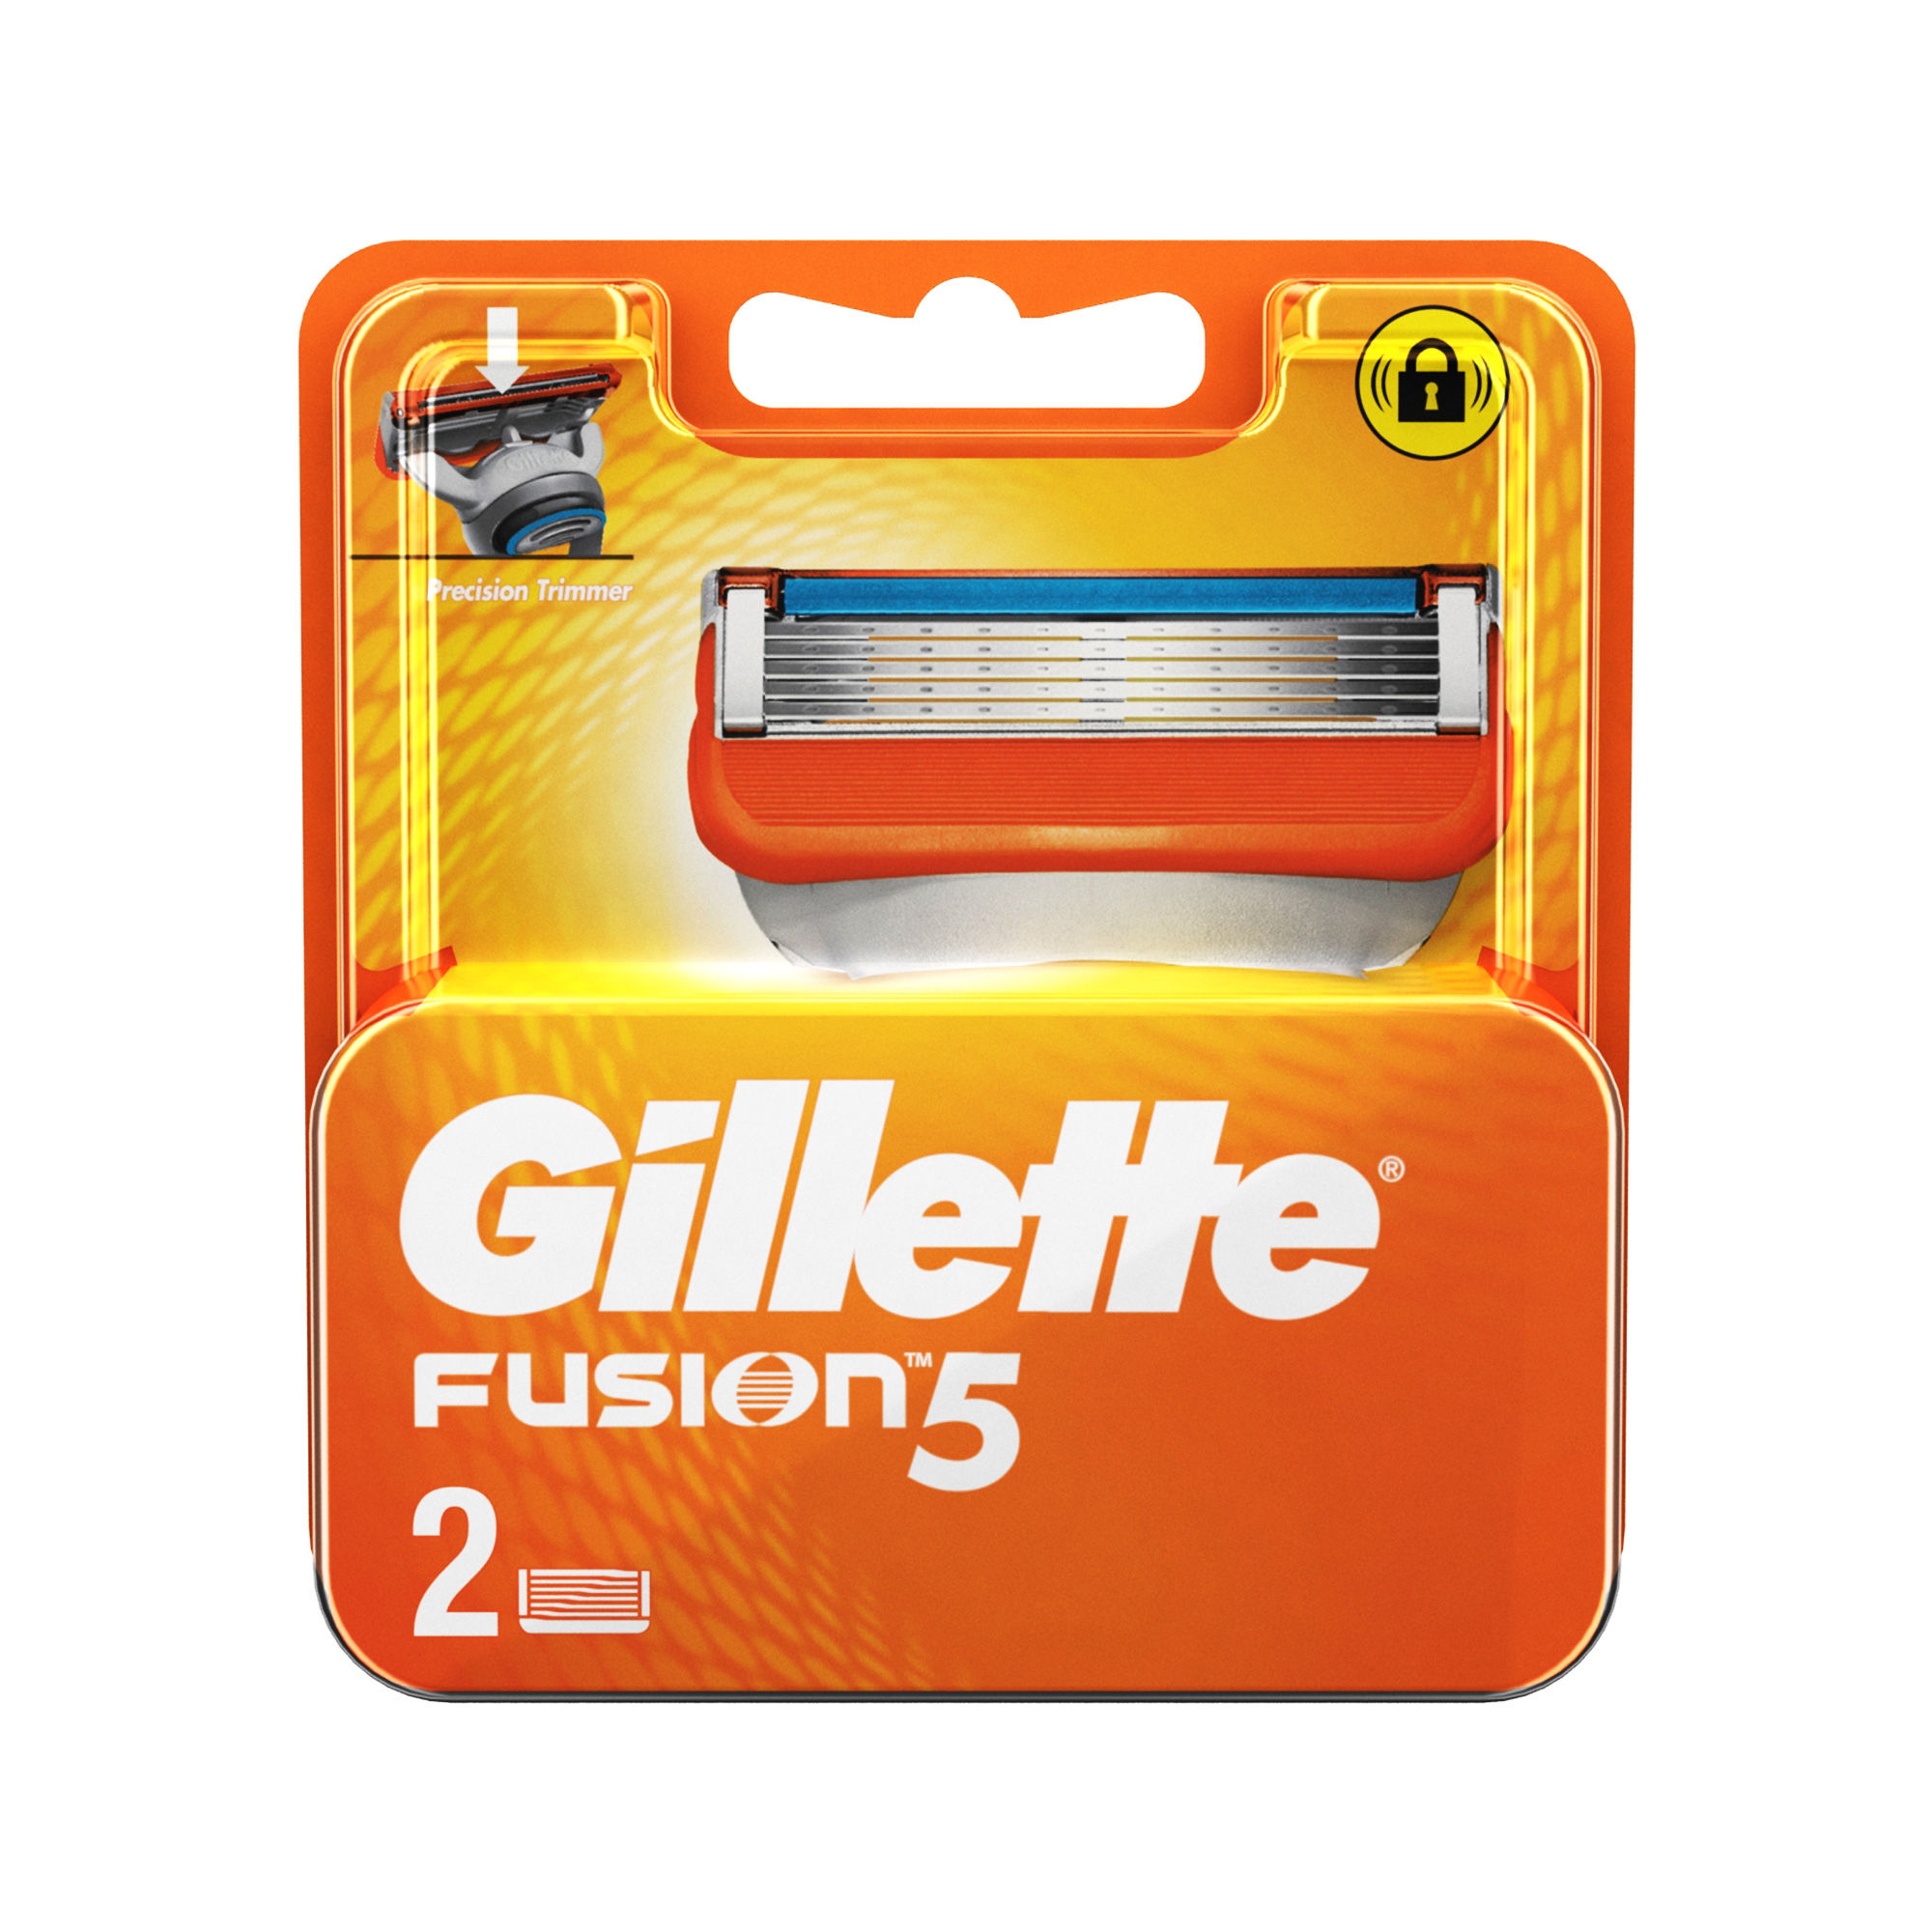 Gillette Fusion Manual Shaving Razor Blades (Cartridge) 2s pack